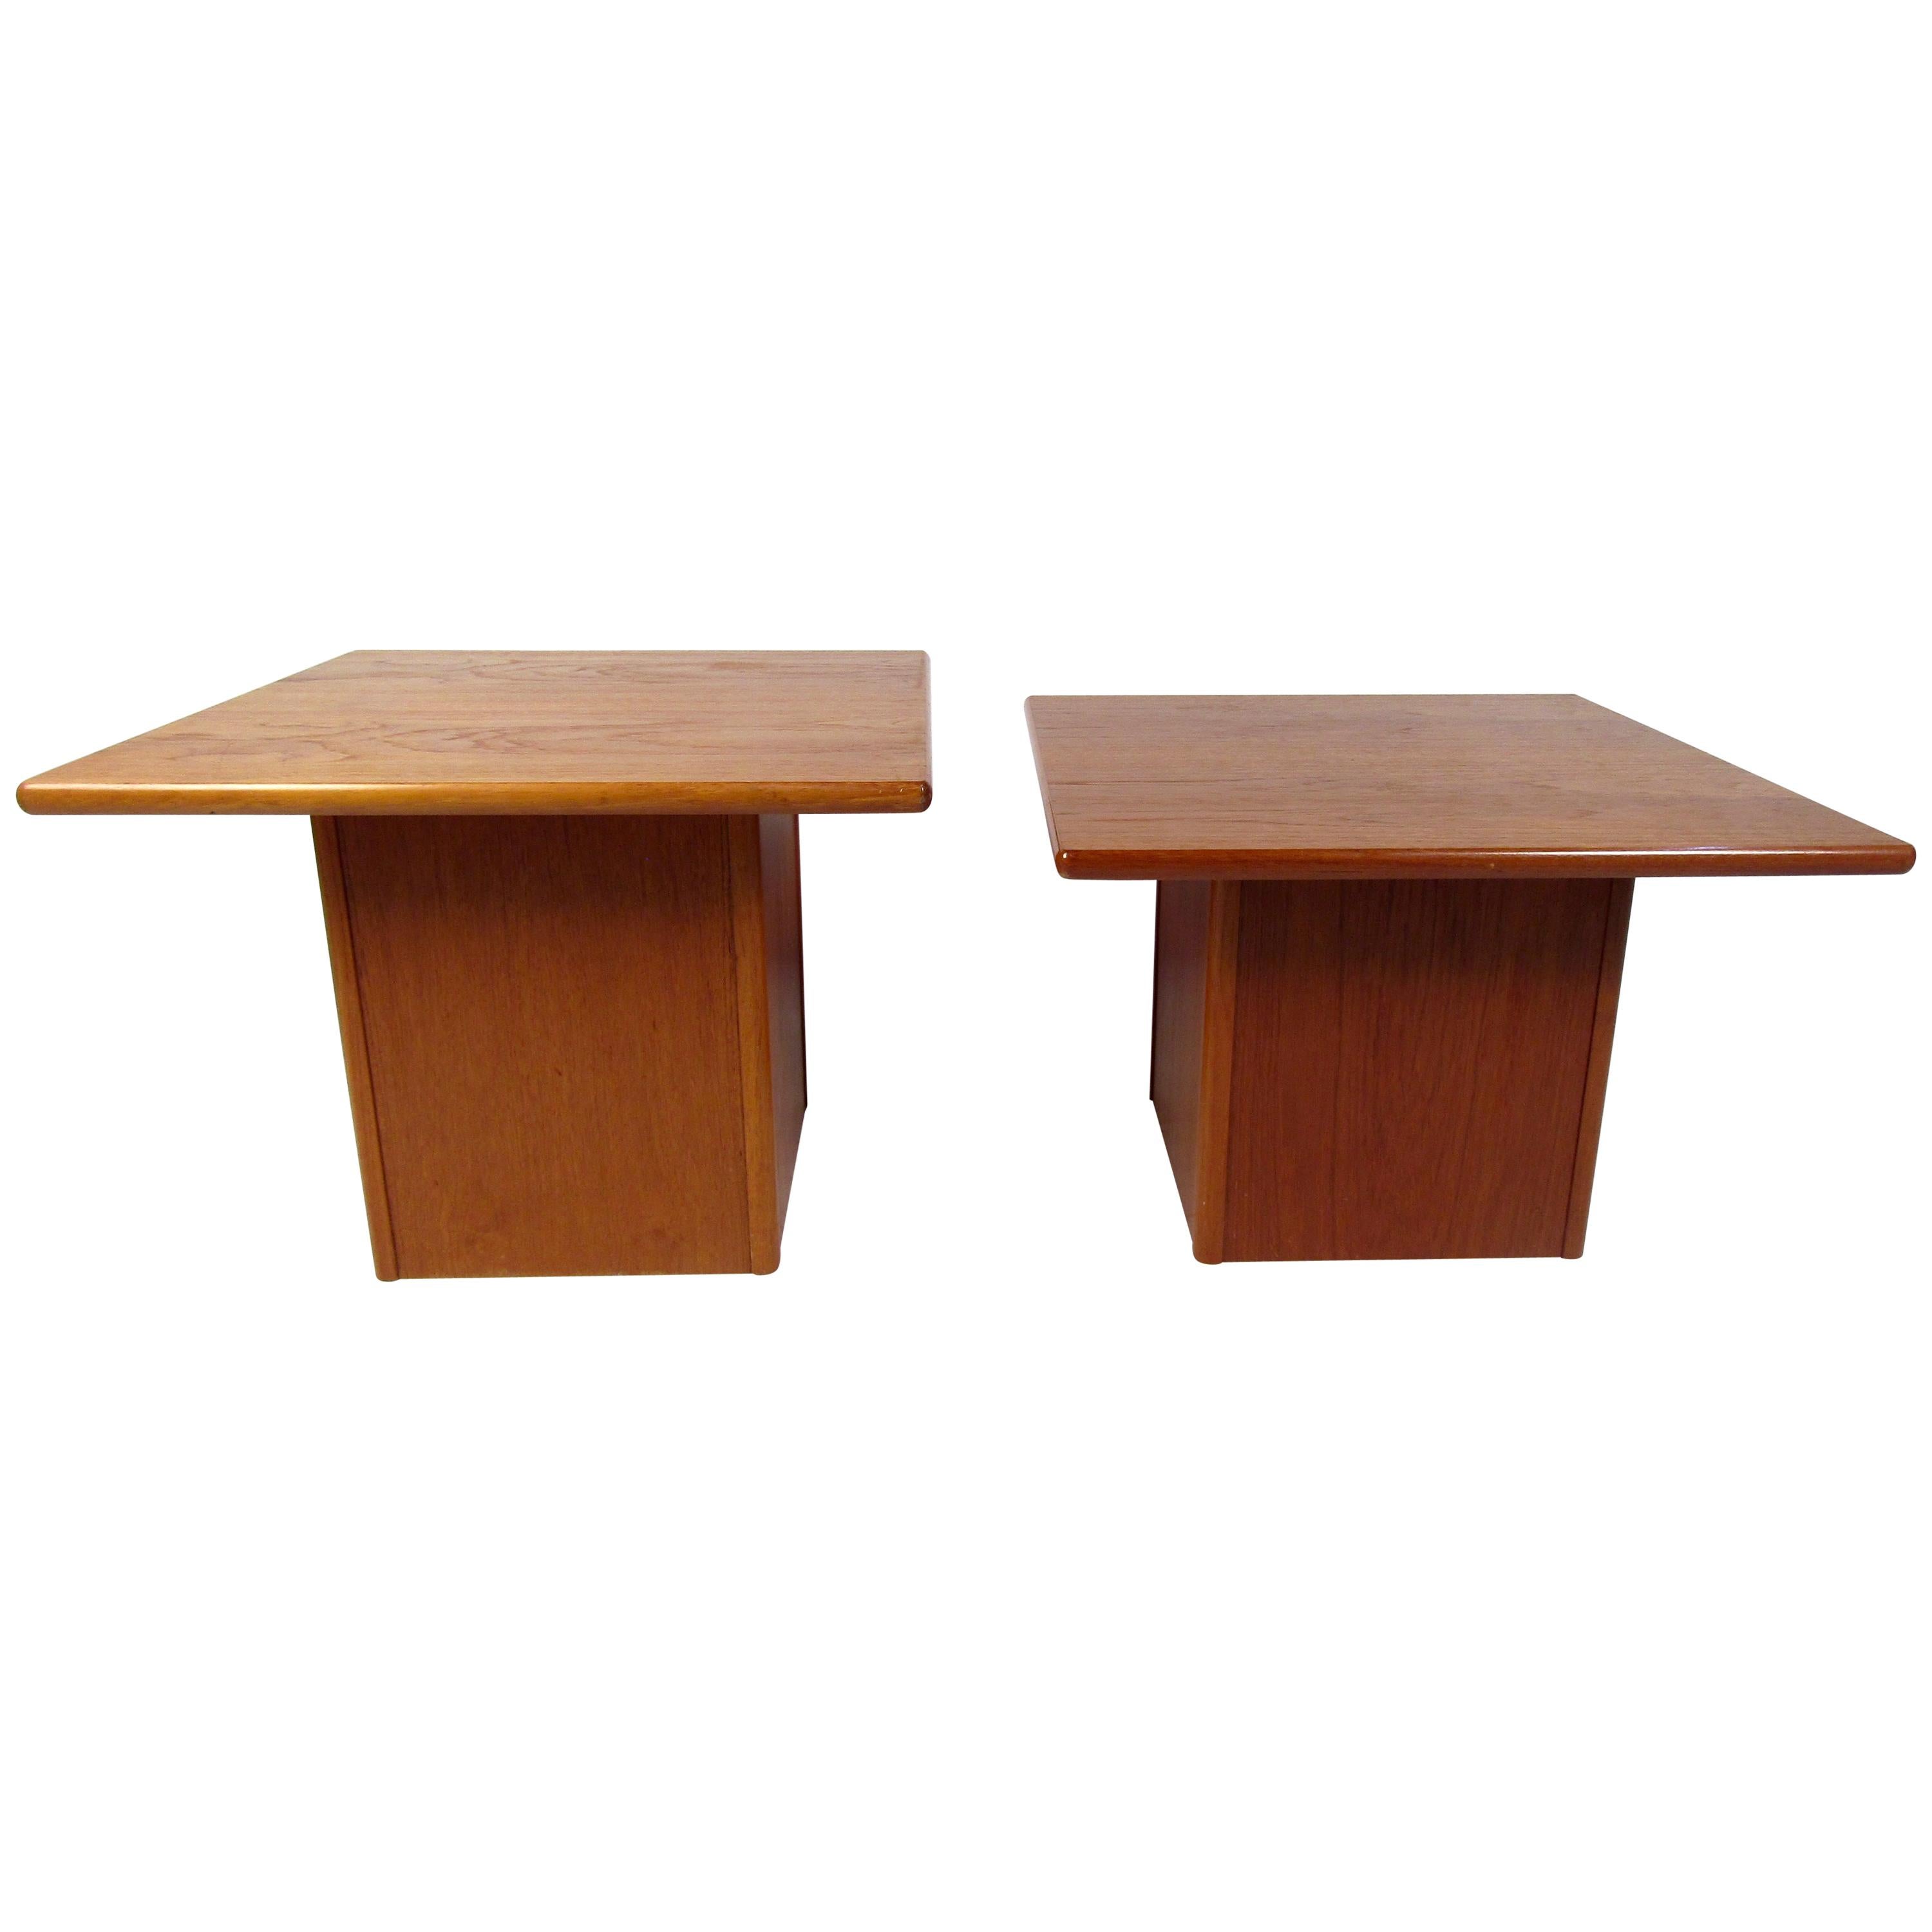 Pair of Vintage Modern Side Tables For Sale